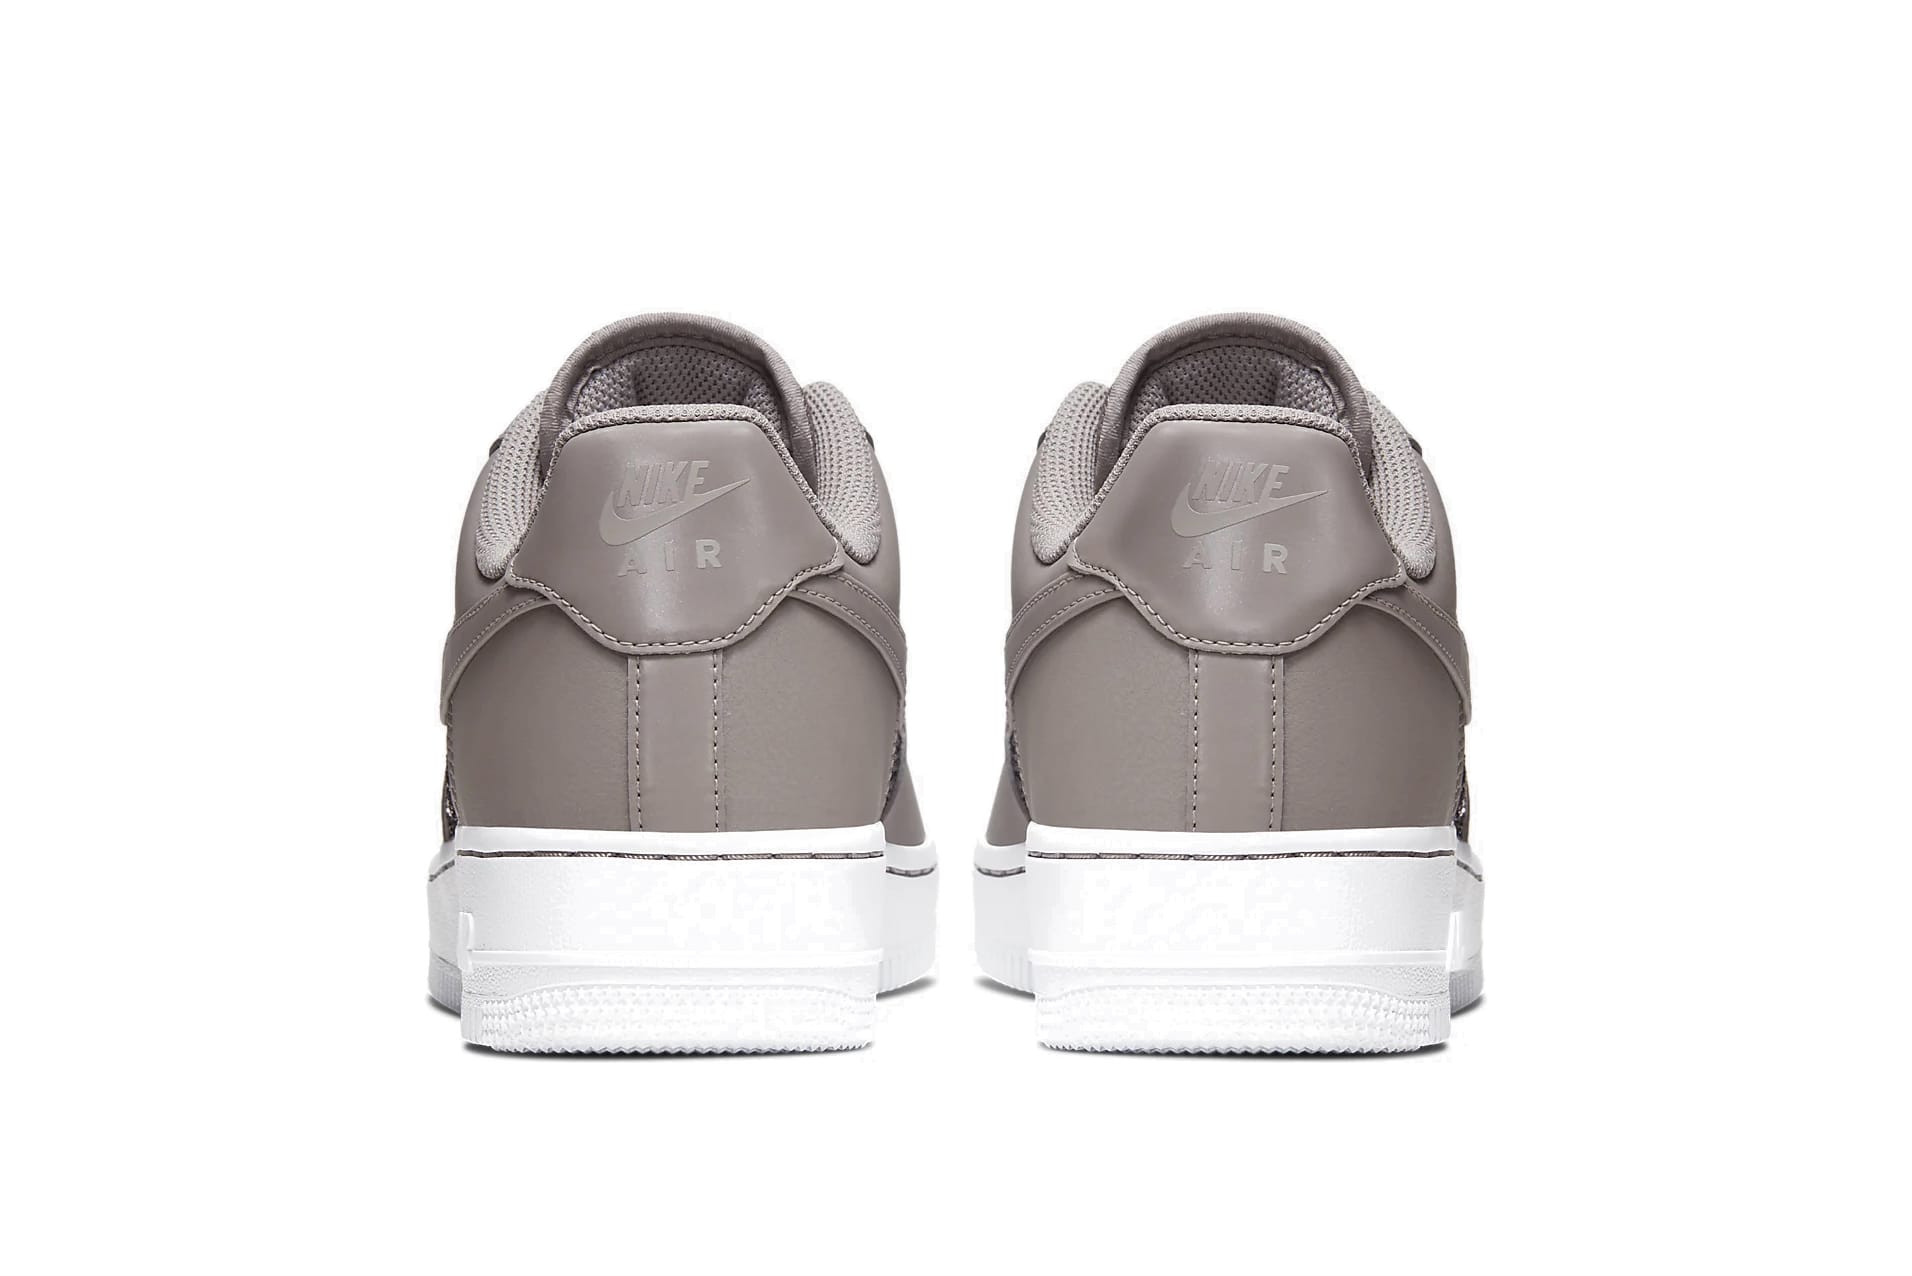 Nike Air Force 1 Glitter Beige Swoosh Sneaker | HYPEBAE قطرة كيربروست للرموش